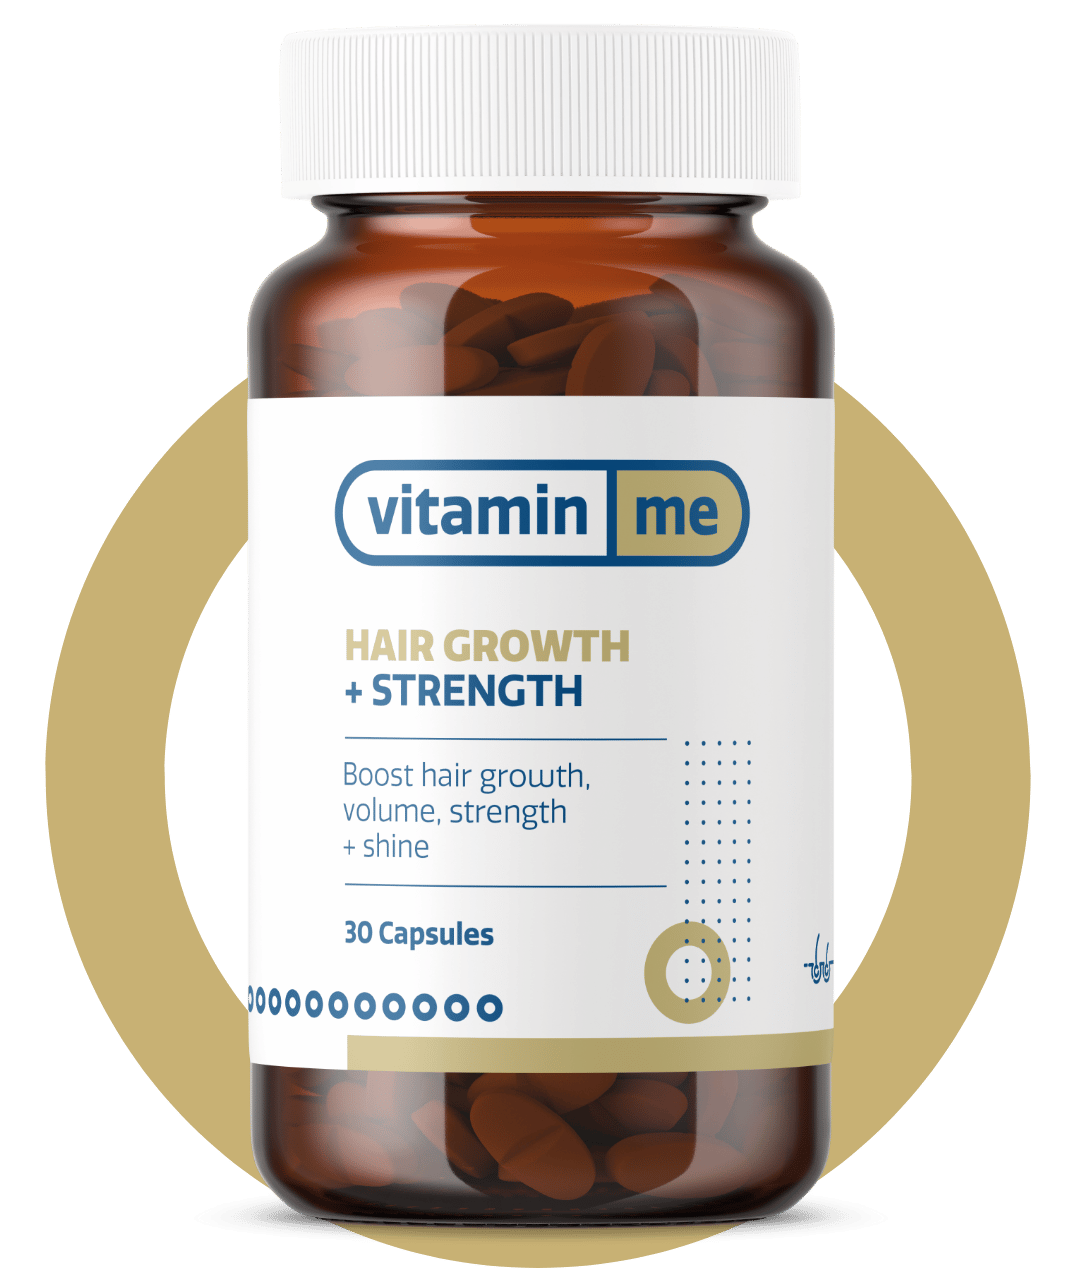 Hair Growth + Strength - VitaminMe